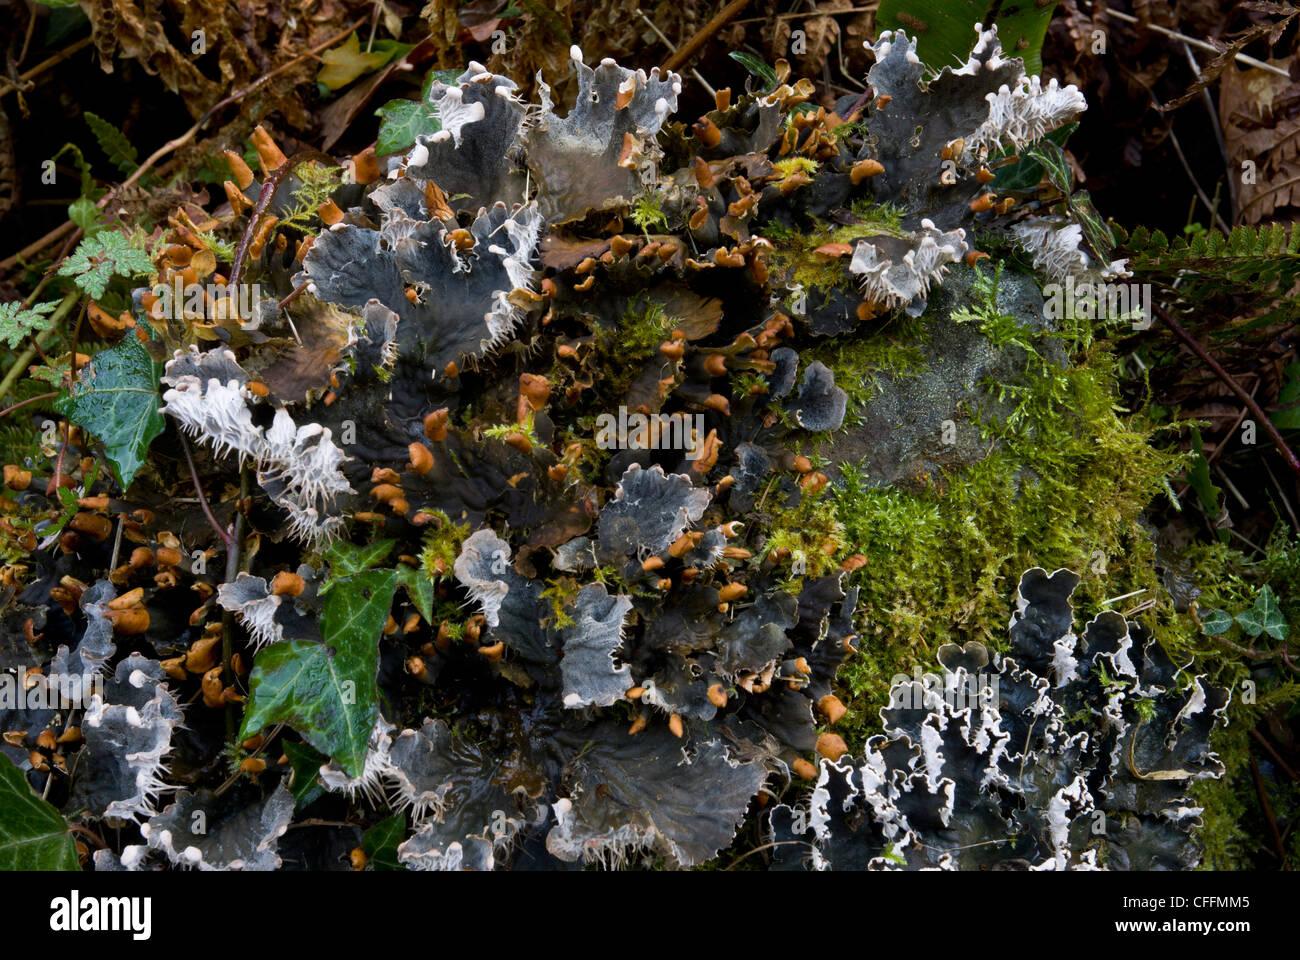 fertile-lichen-peltigera-horizontalis-growing-among-moss-on-old-wall-CFFMM5.jpg